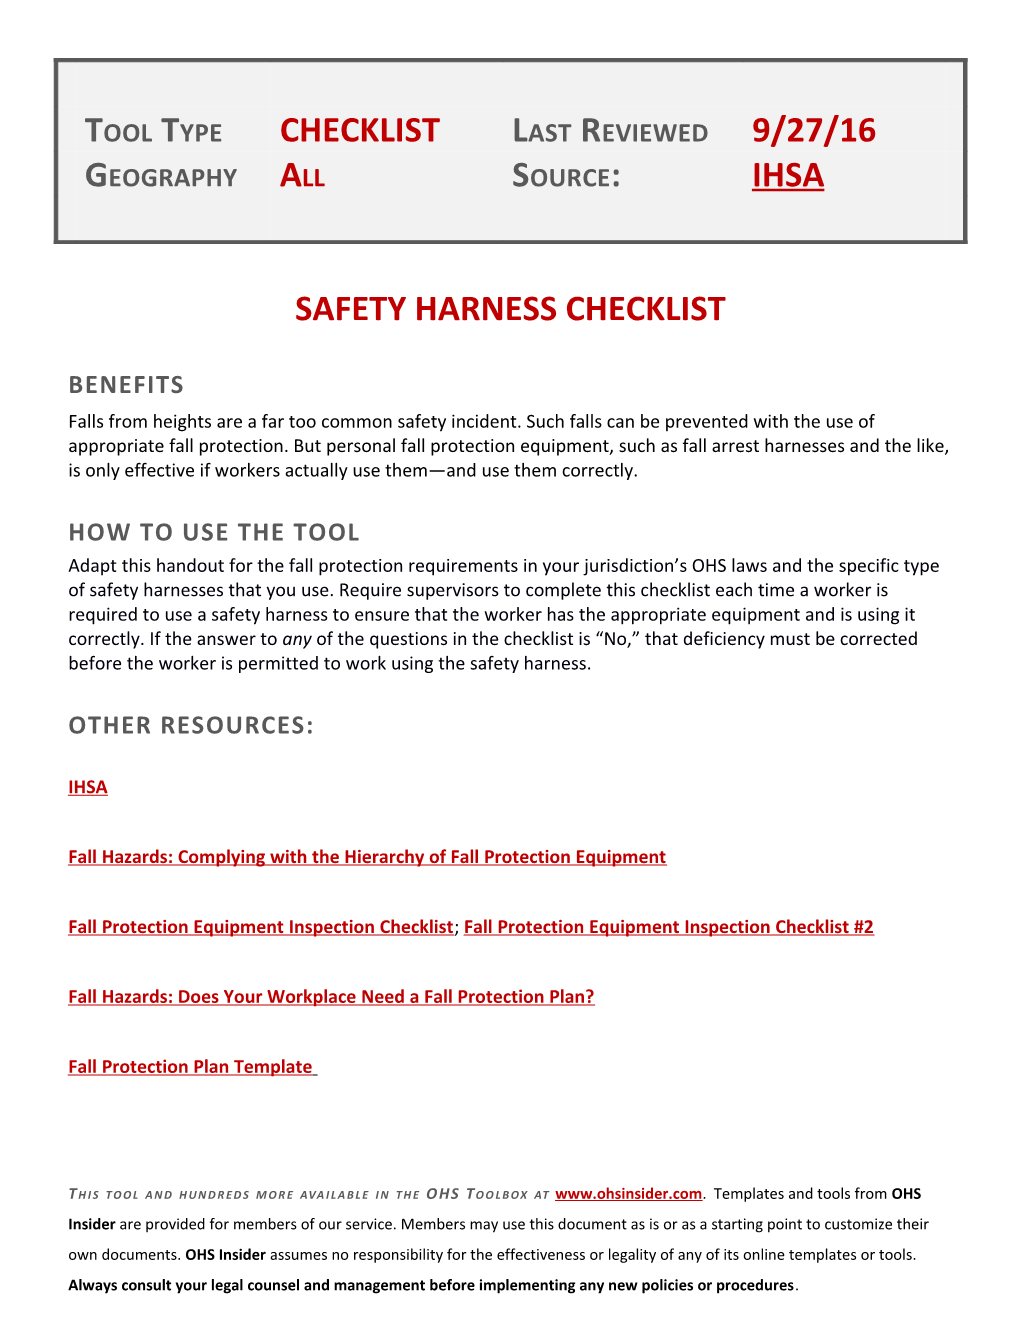 Safety Harness Checklist